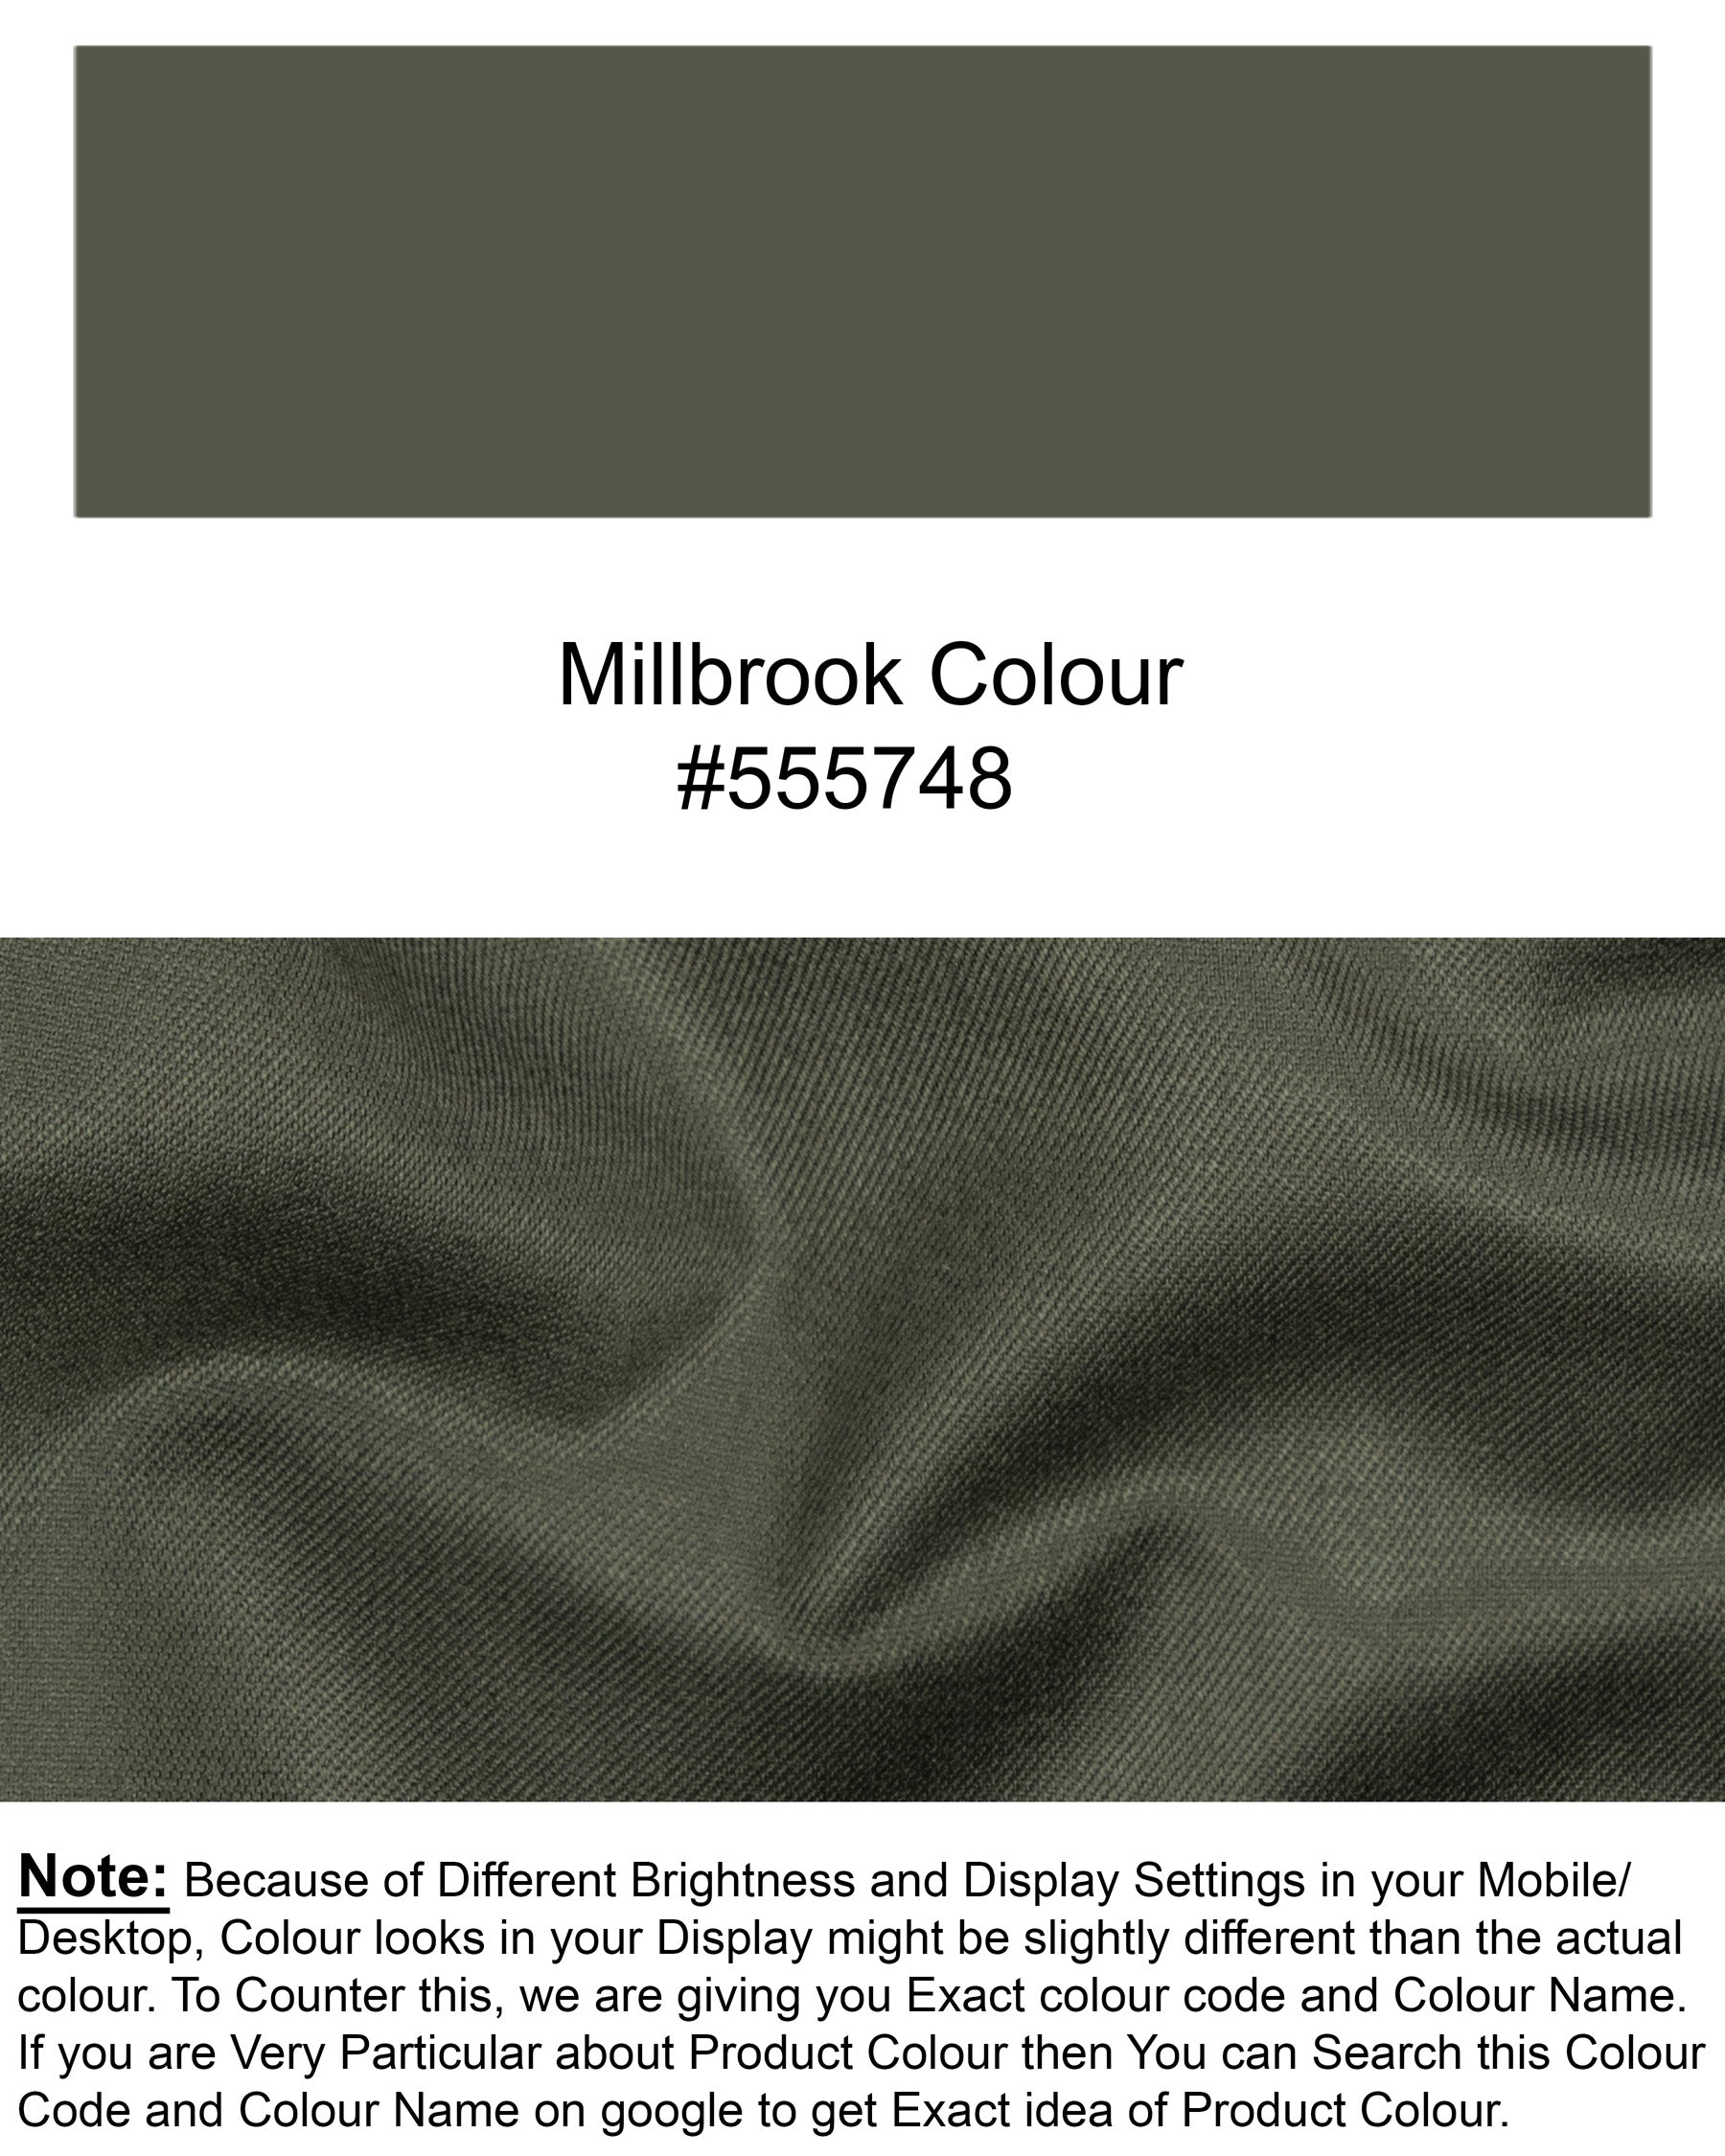 Millbrook Green Cross Buttoned Bandhgala/Mandarin Premium Cotton Suit ST1297-CBG-36, ST1297-CBG-38, ST1297-CBG-40, ST1297-CBG-42, ST1297-CBG-44, ST1297-CBG-46, ST1297-CBG-48, ST1297-CBG-50, ST1297-CBG-52, ST1297-CBG-54, ST1297-CBG-56, ST1297-CBG-58, ST1297-CBG-60